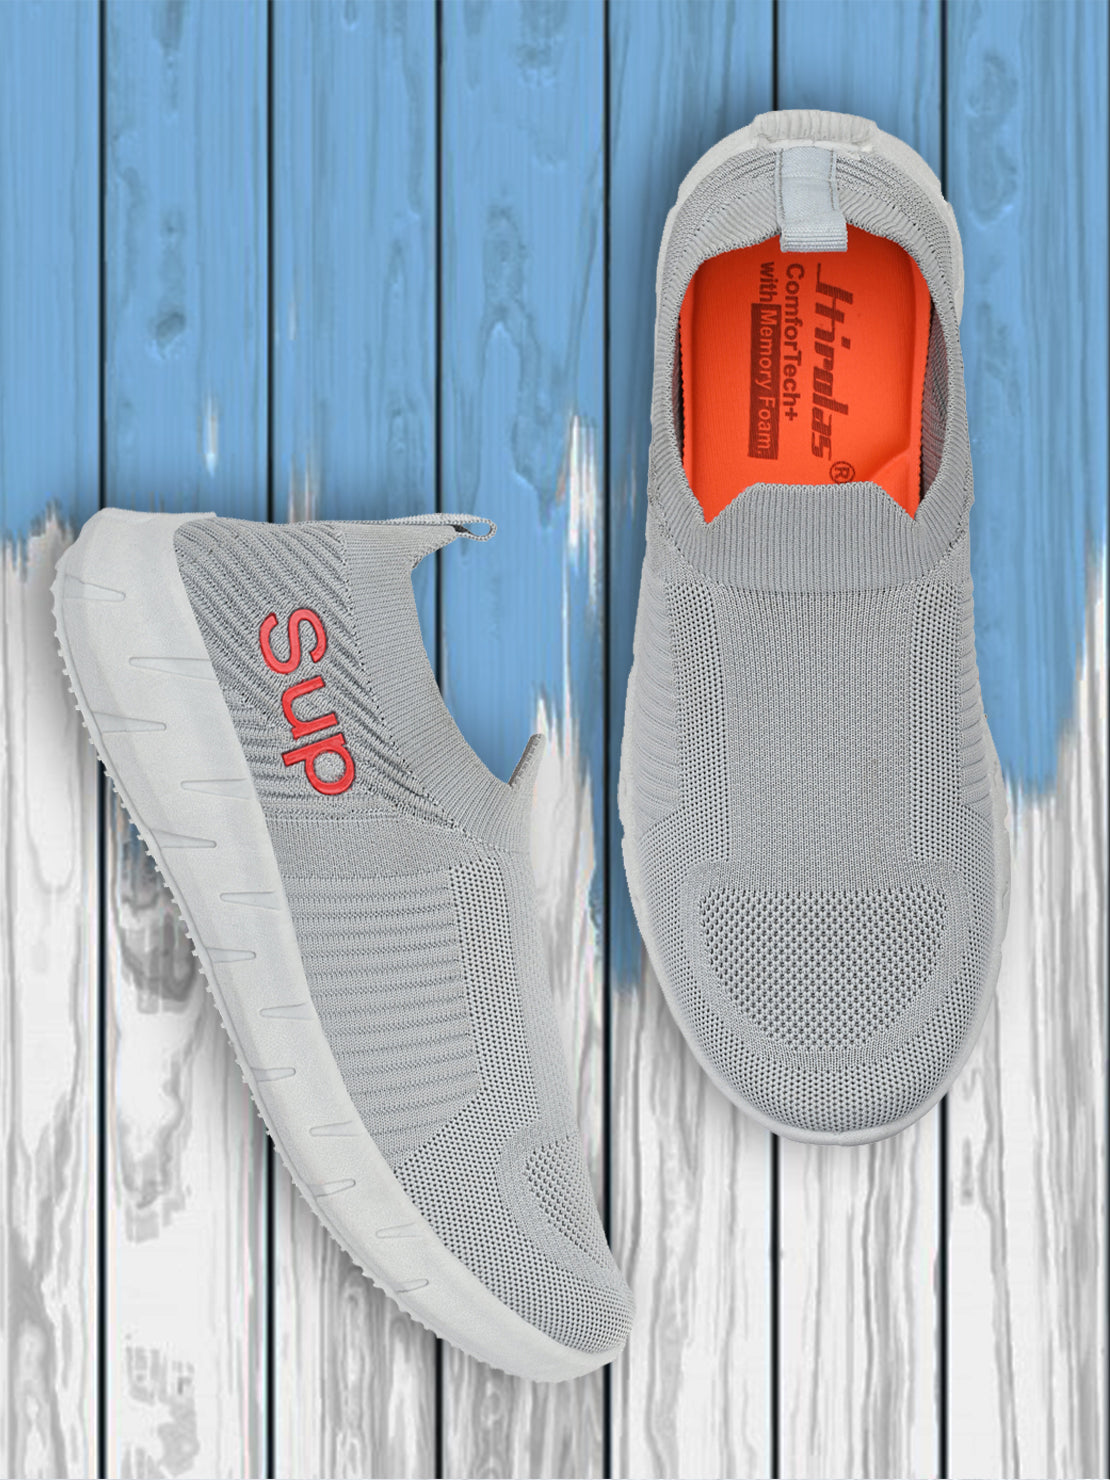 Hirolas® Men's Grey Knitted Running/Walking/Gym Slip On Sneaker Sport Shoes (HRL2048GRY)